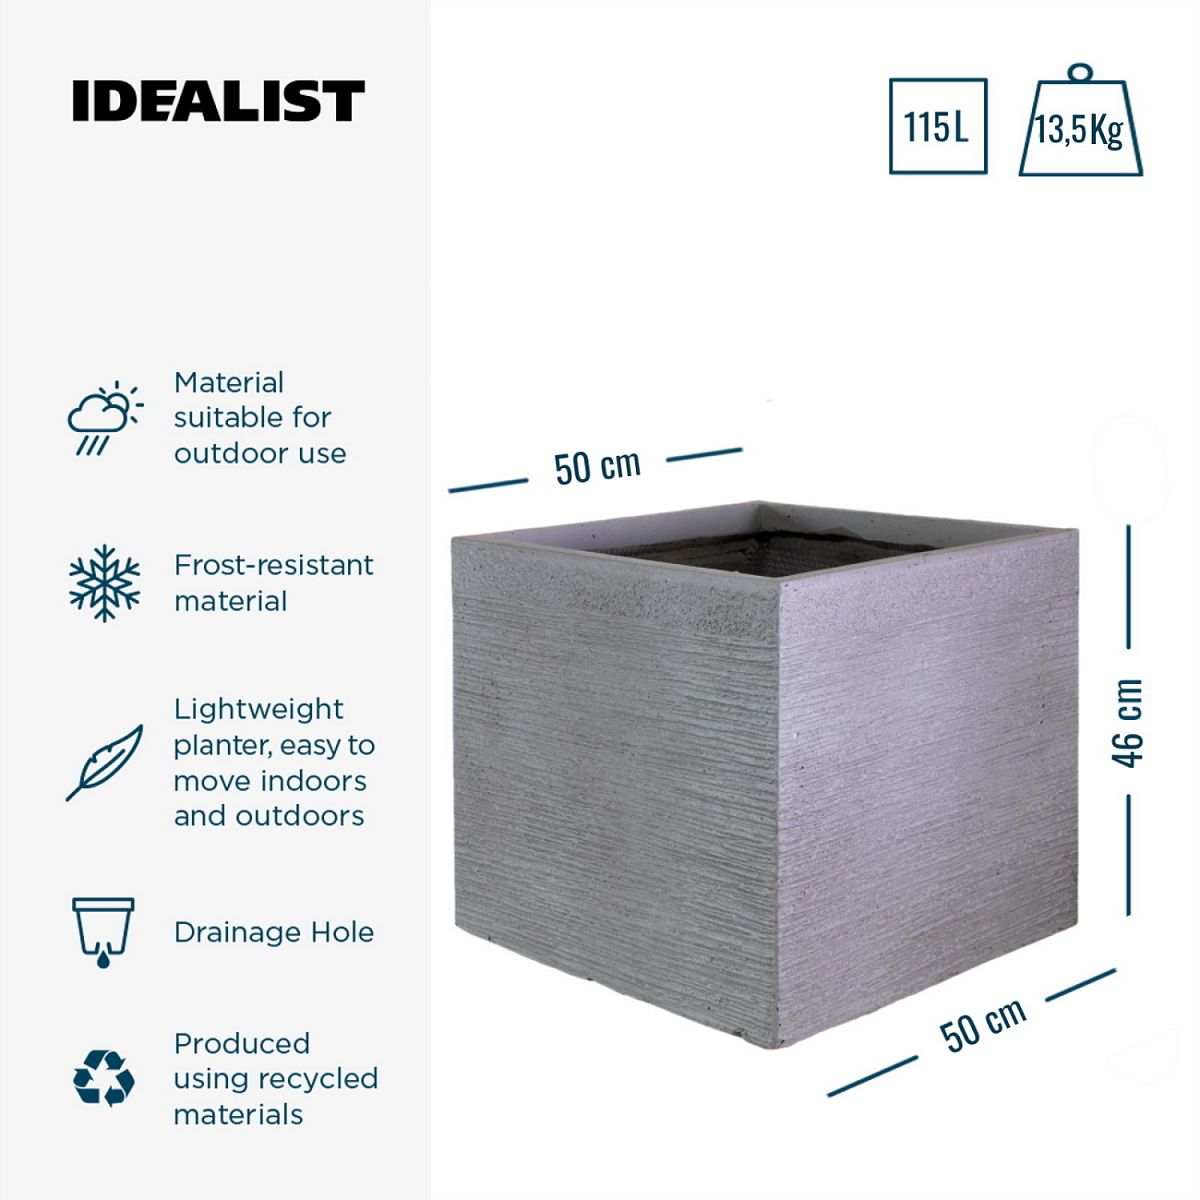 IDEALIST Lite Ribbed Light Concrete Square Planter